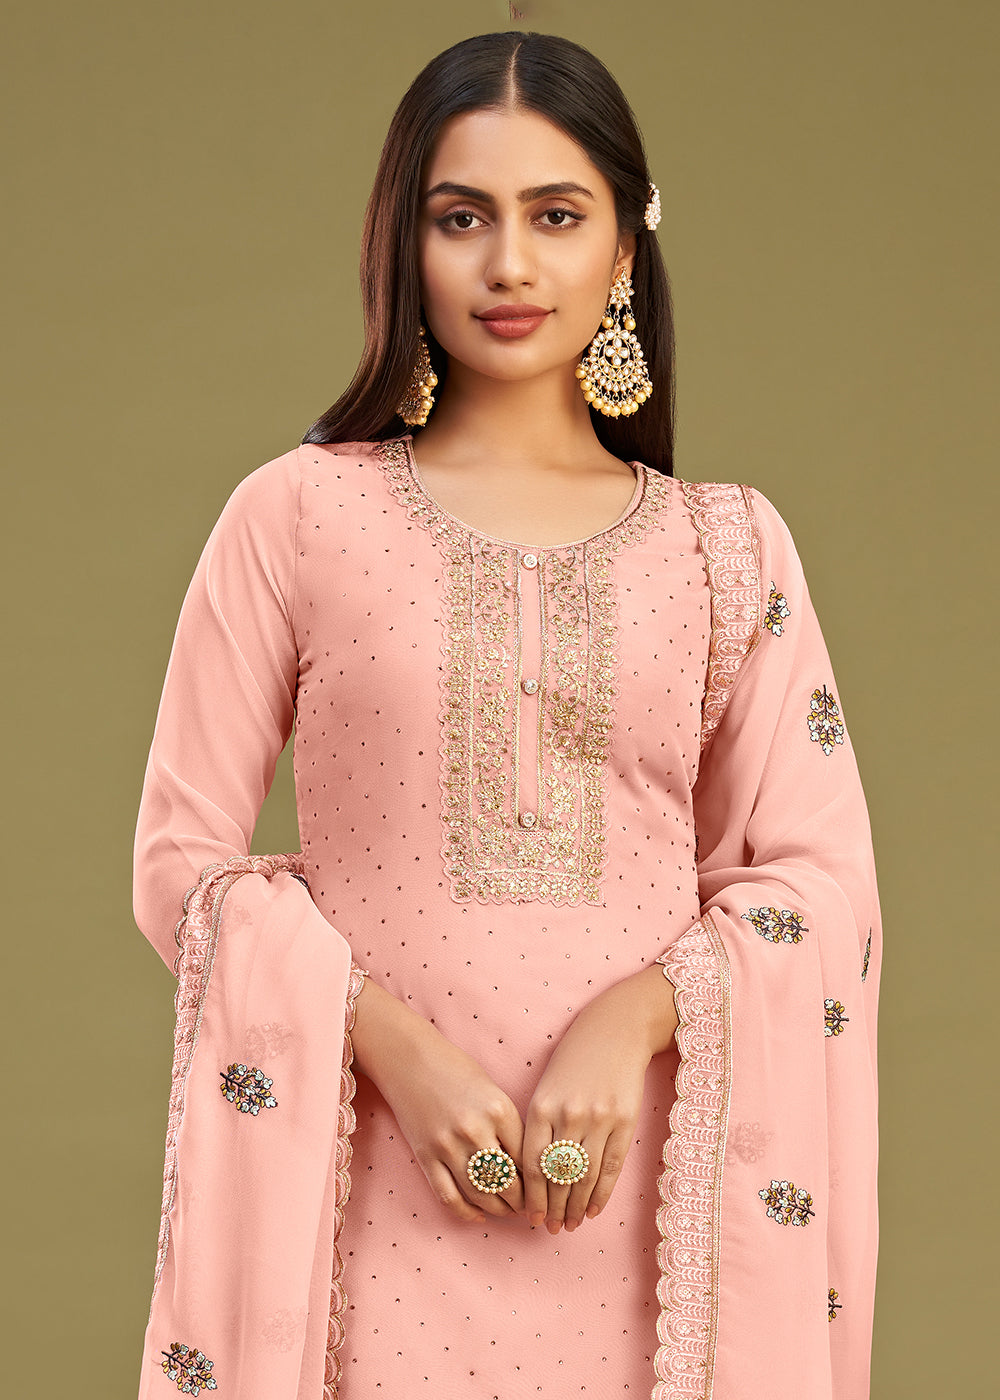 Buy Now Blush Peach Swarovski Work & Embroidered Eid Wear Salwar Suit Online in USA, UK, Canada, Germany, Australia & Worldwide at Empress Clothing. 